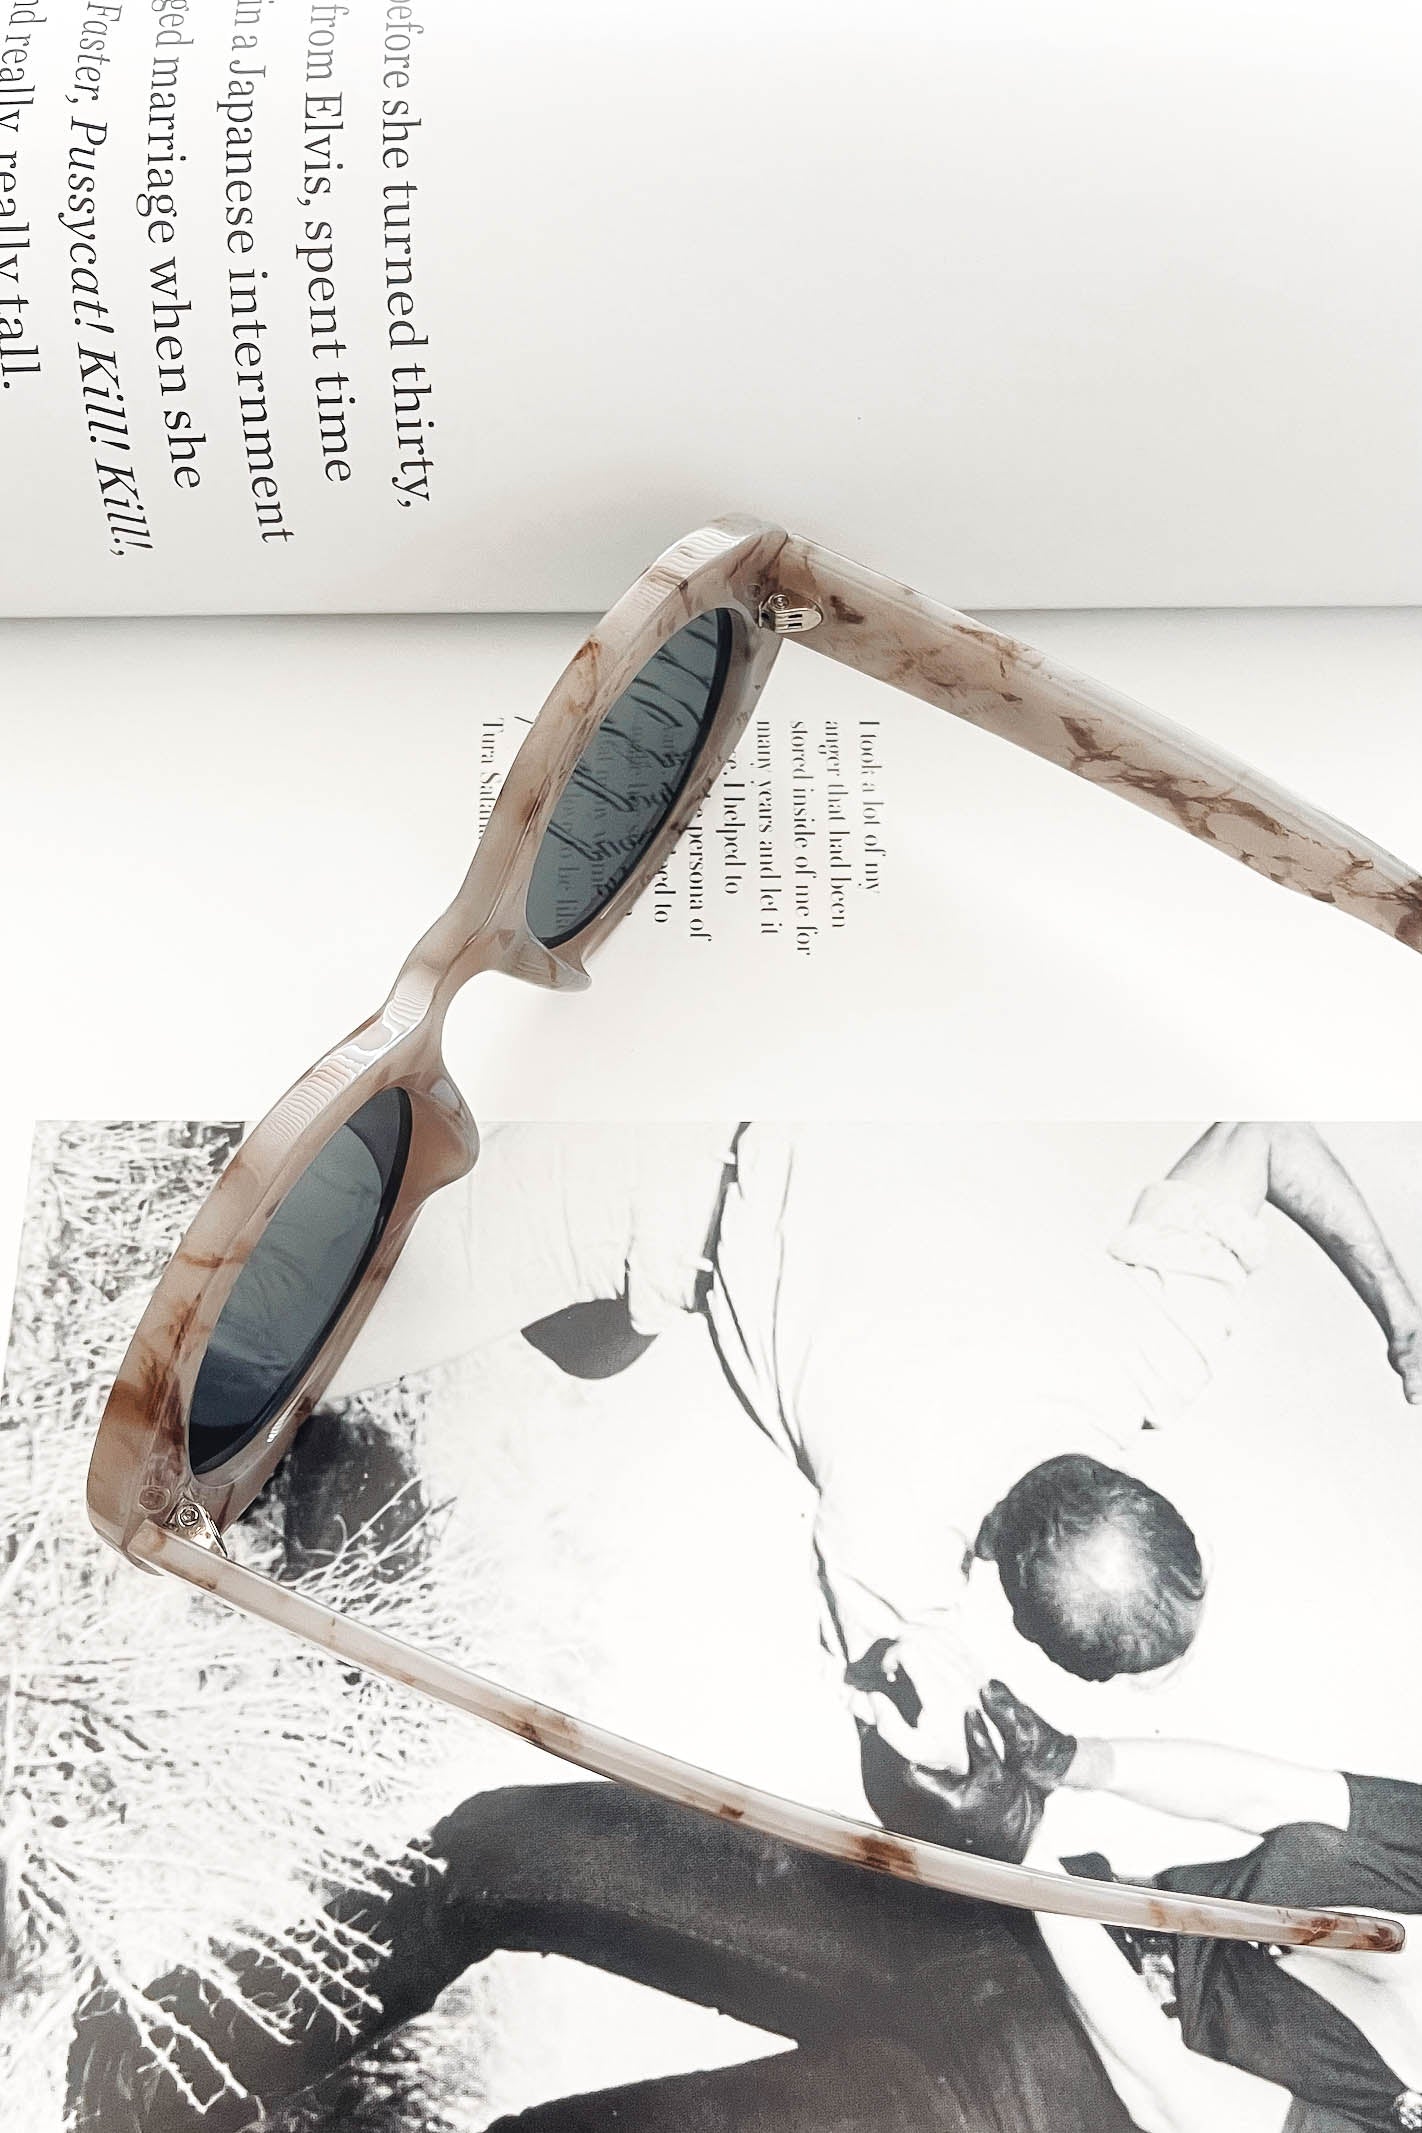 Grey Oval Sunglasses